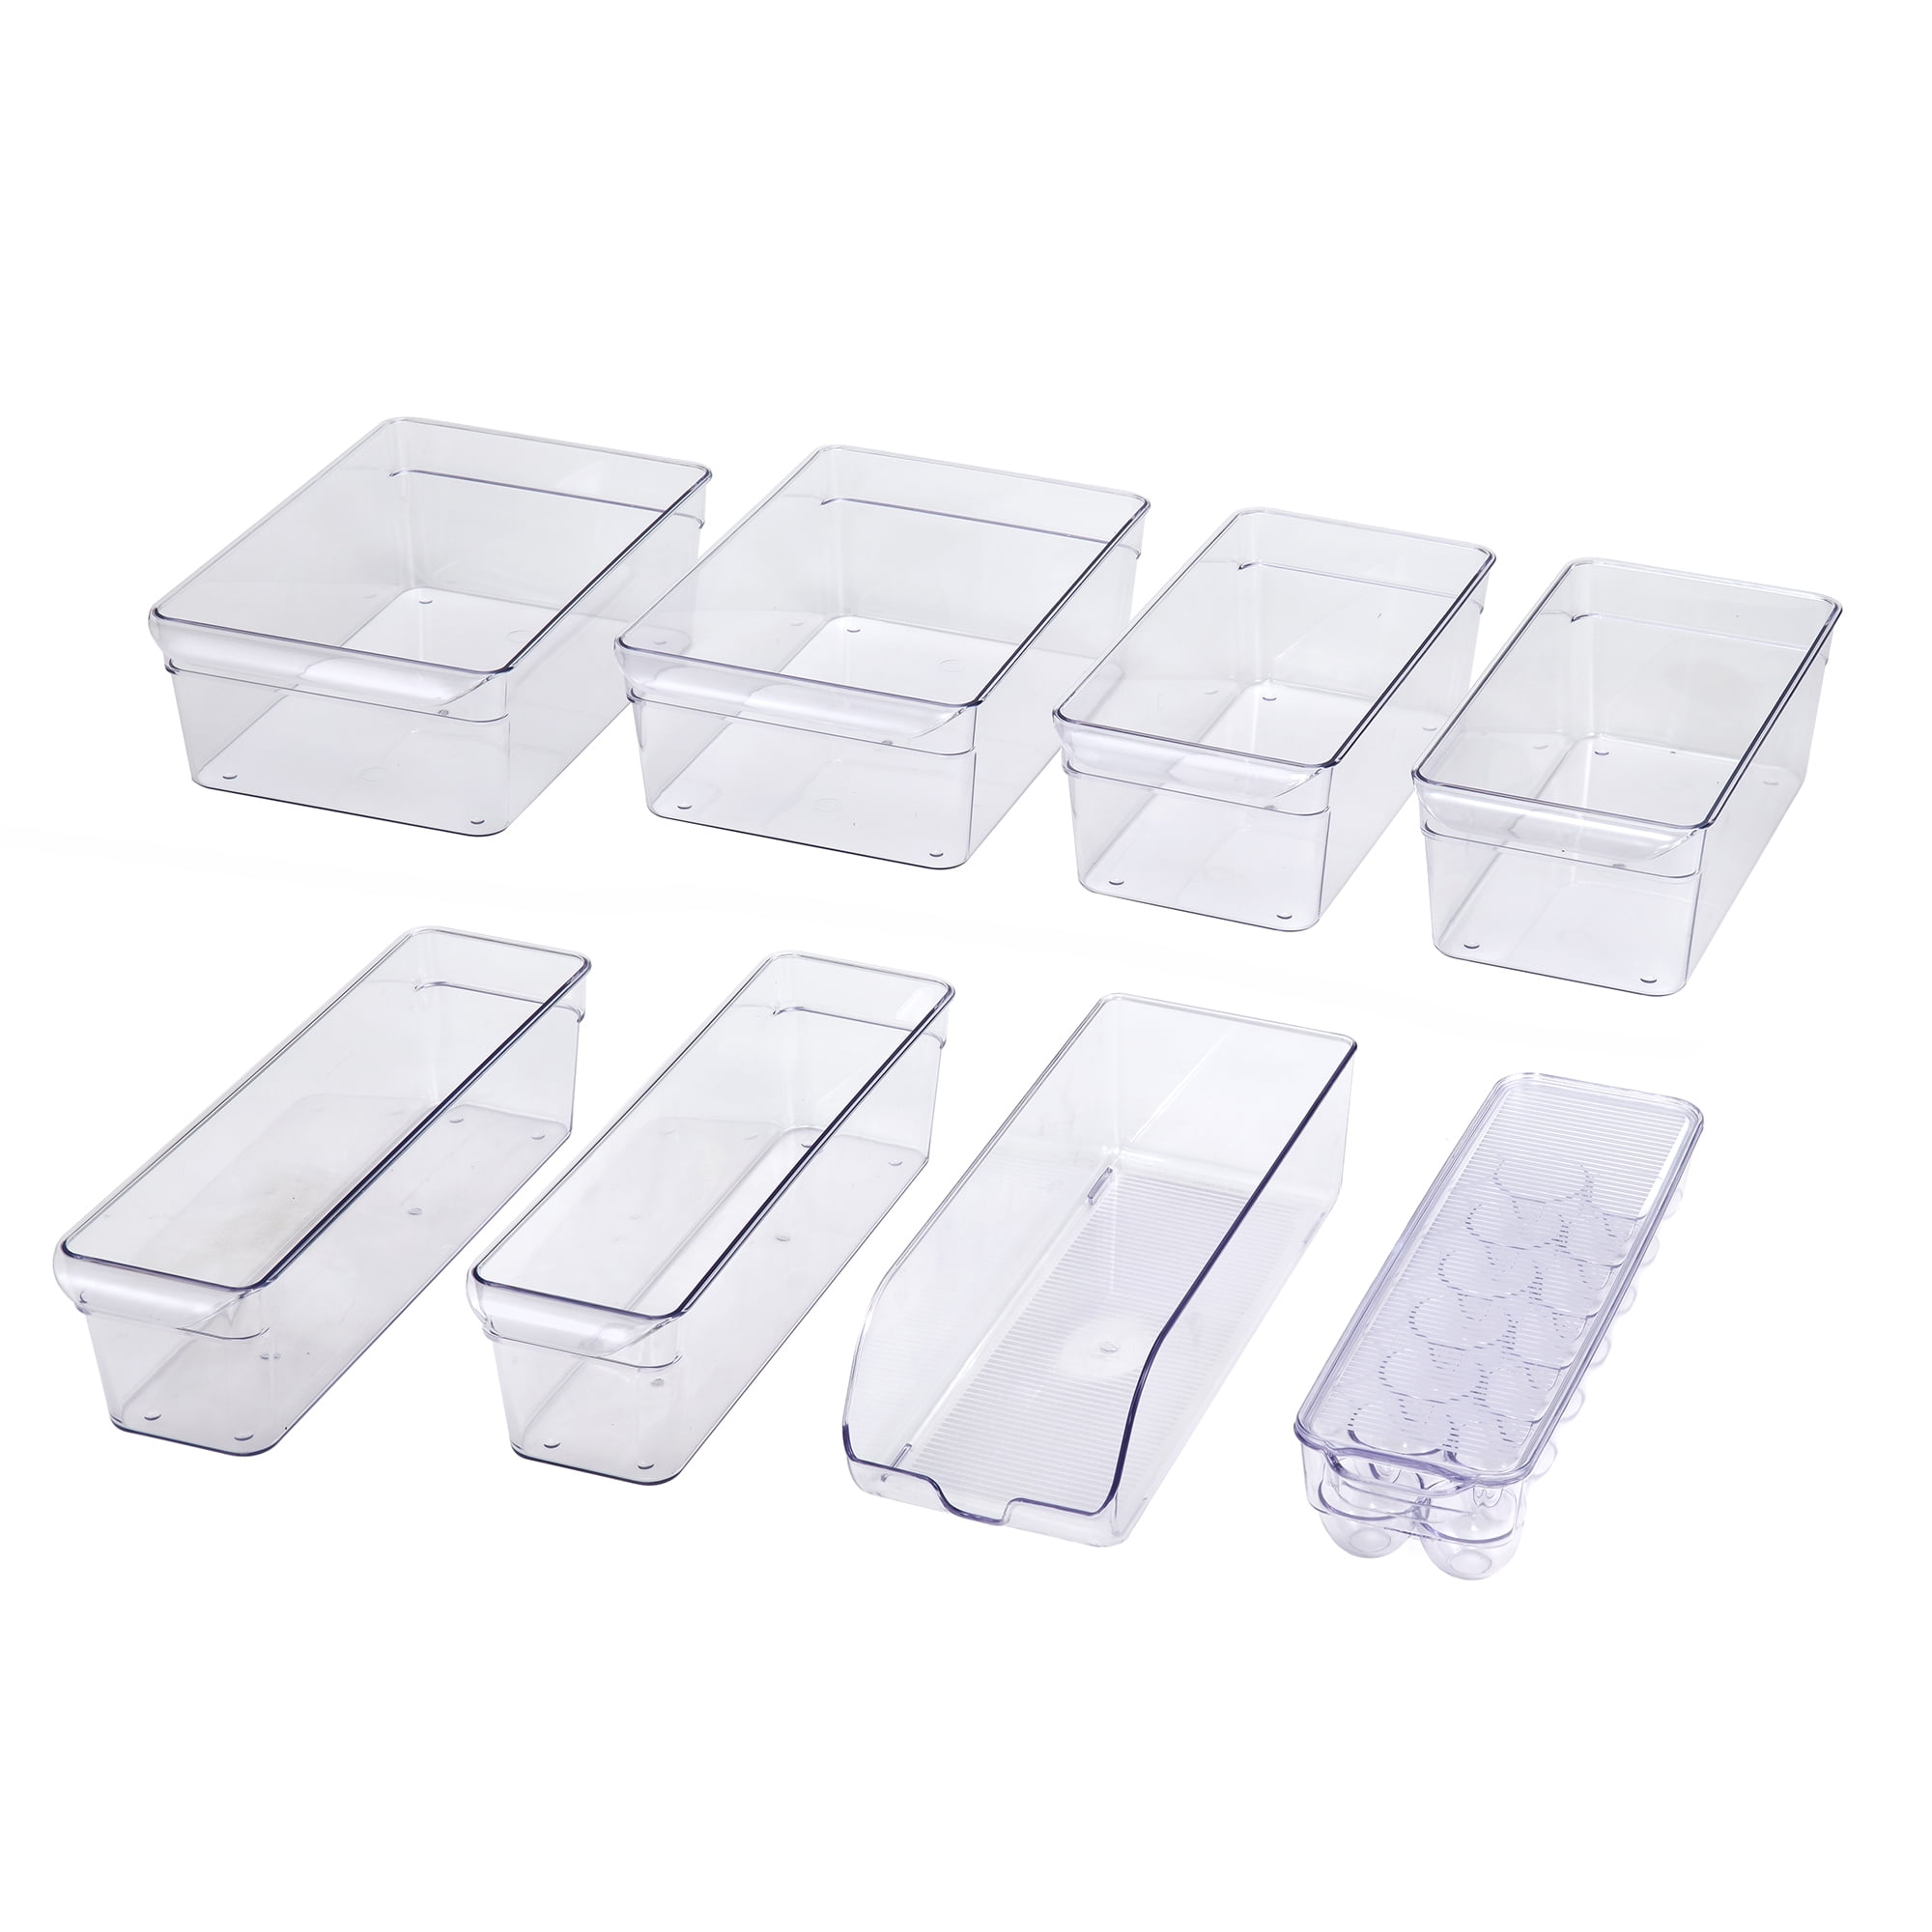 8-Piece Mainstays Clear Plastic Fridge Organization Bin Set (Various Sizes) $9.17 + Free S&H w/ Walmart+ or $35